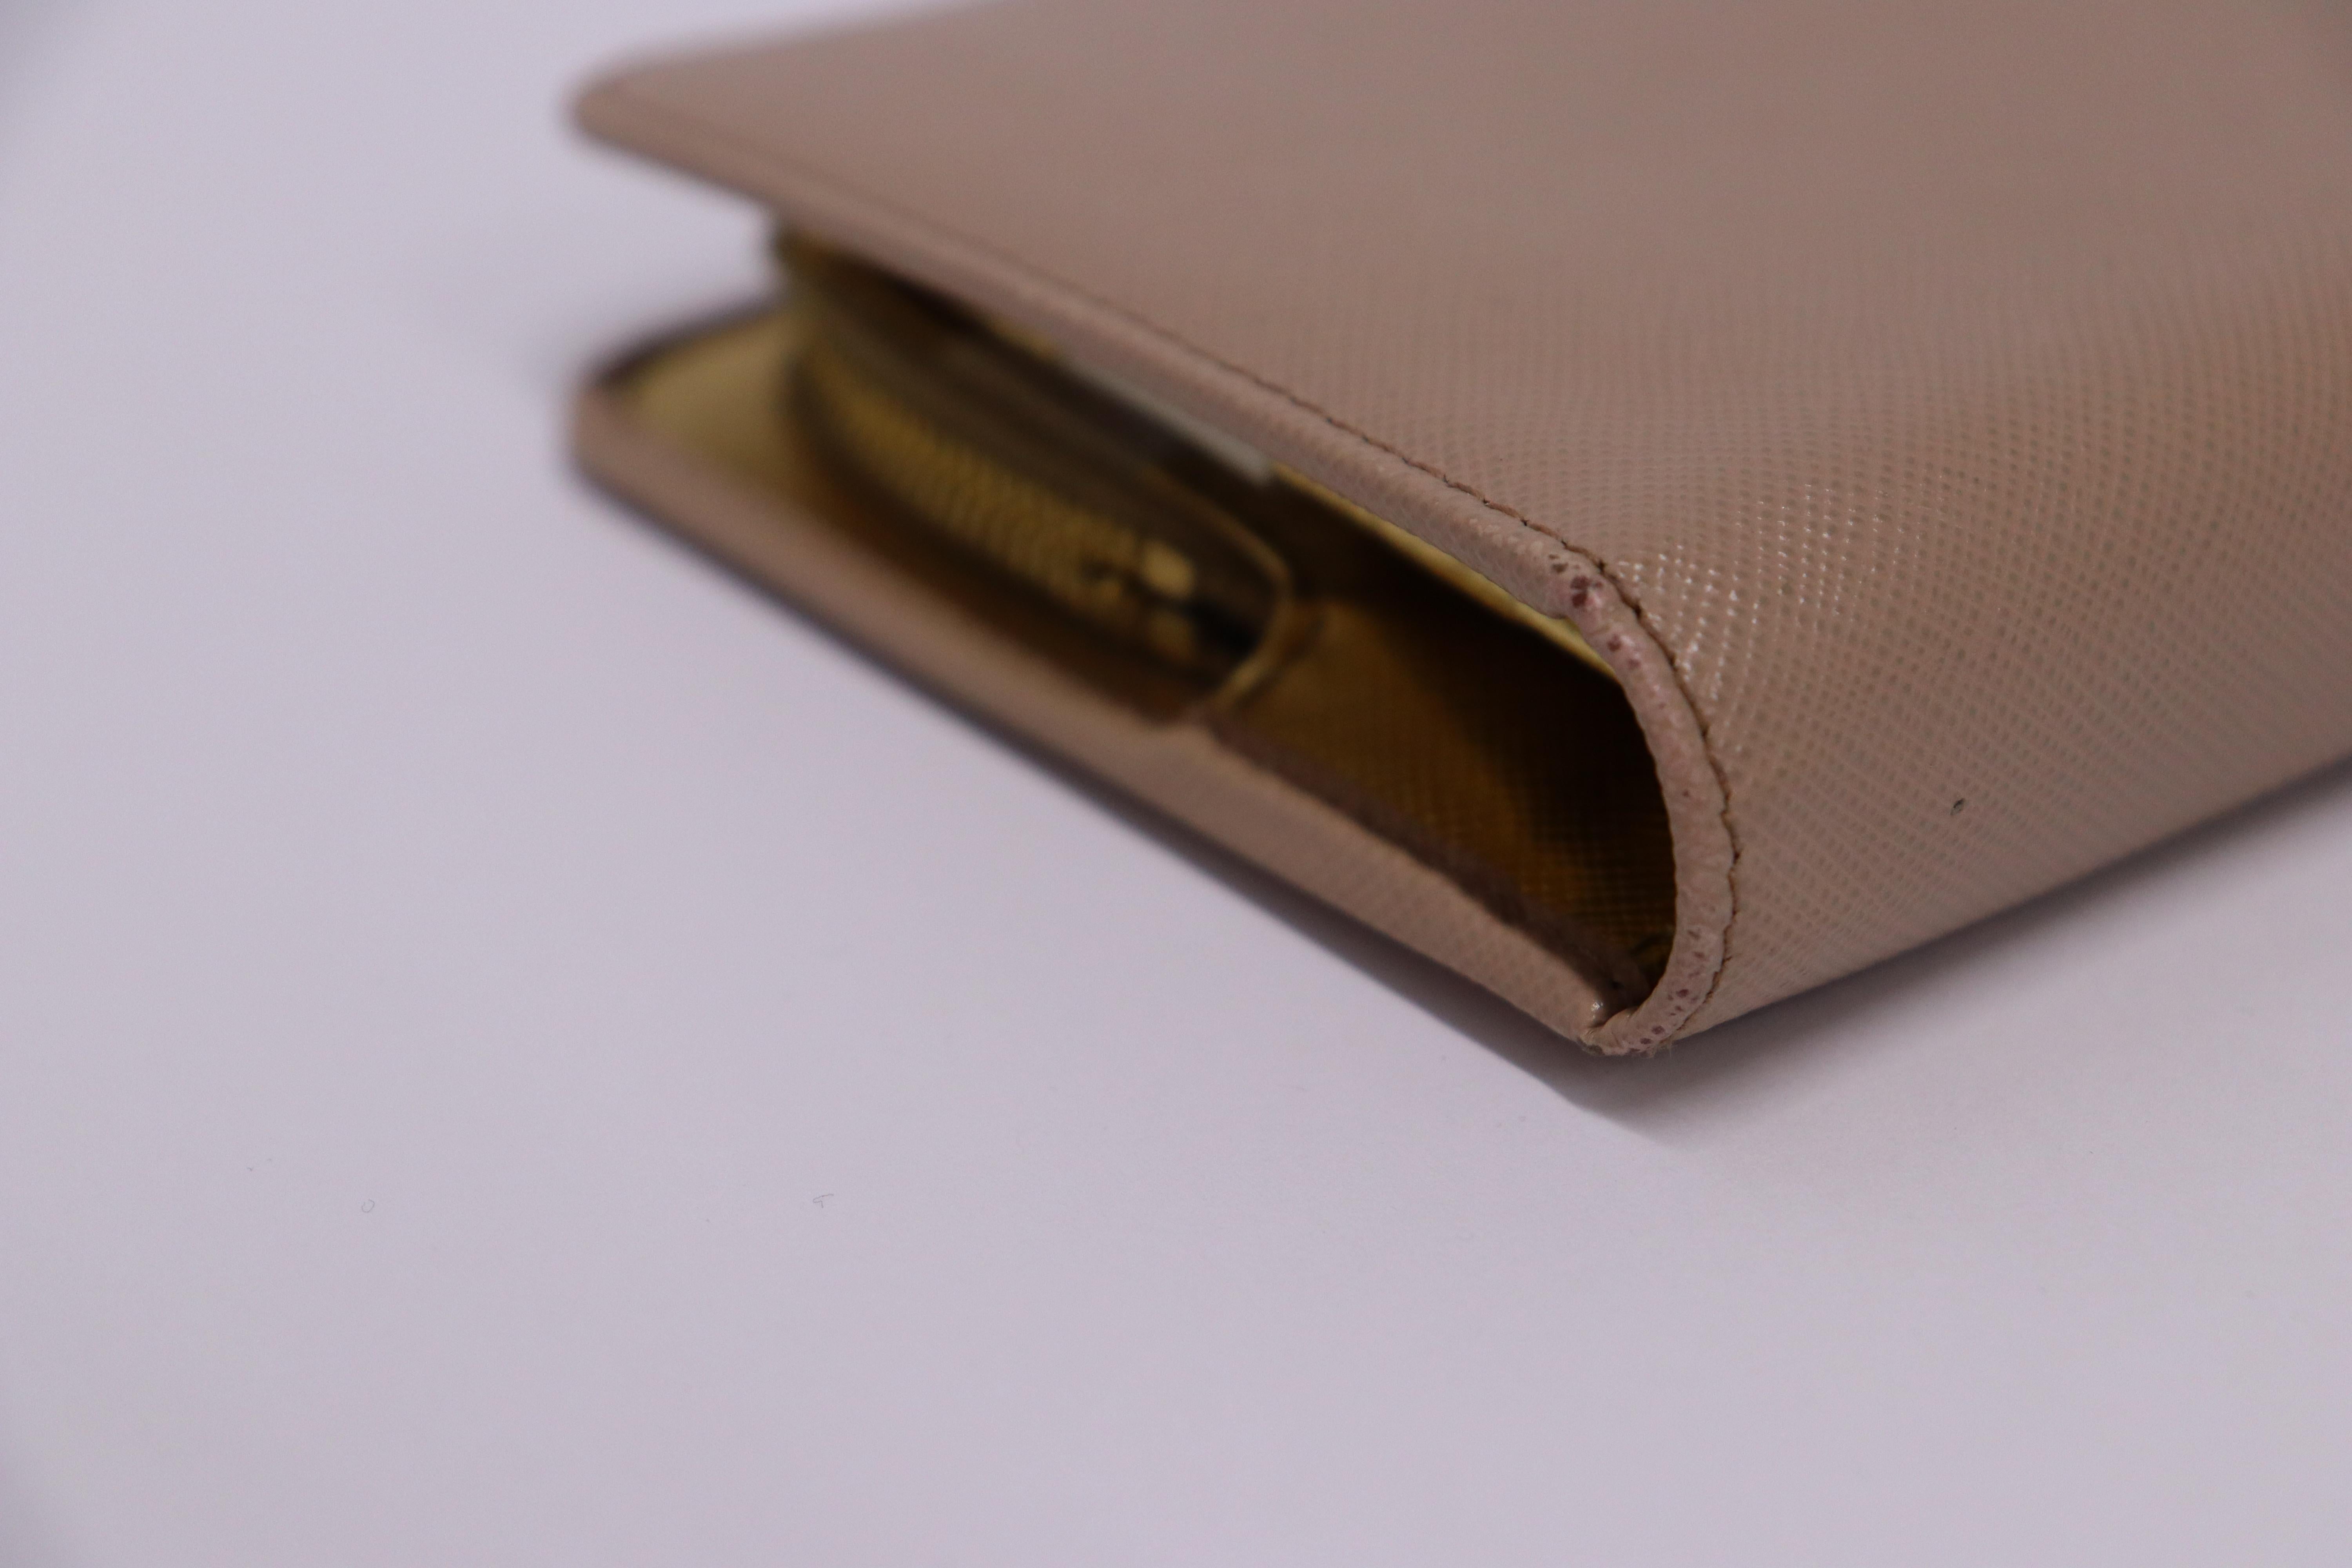 Prada Large Saffiano Leather Wallet/Clutch 2